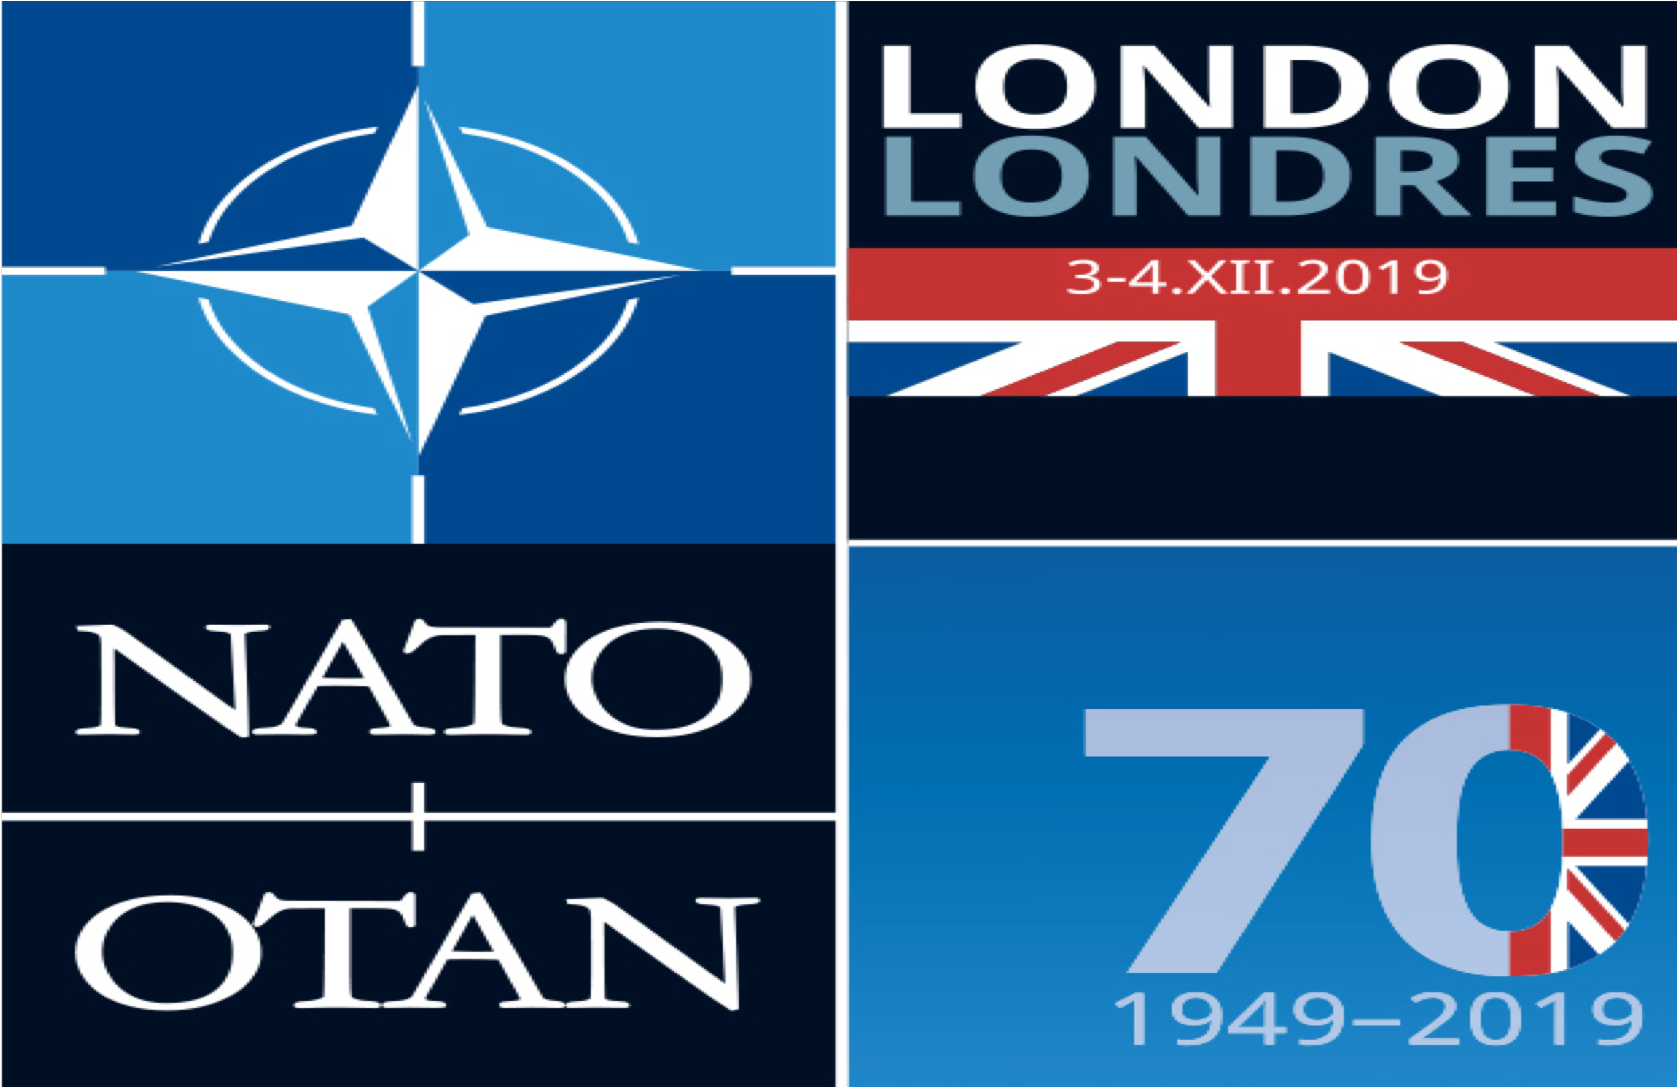 NATO Leaders Meeting London